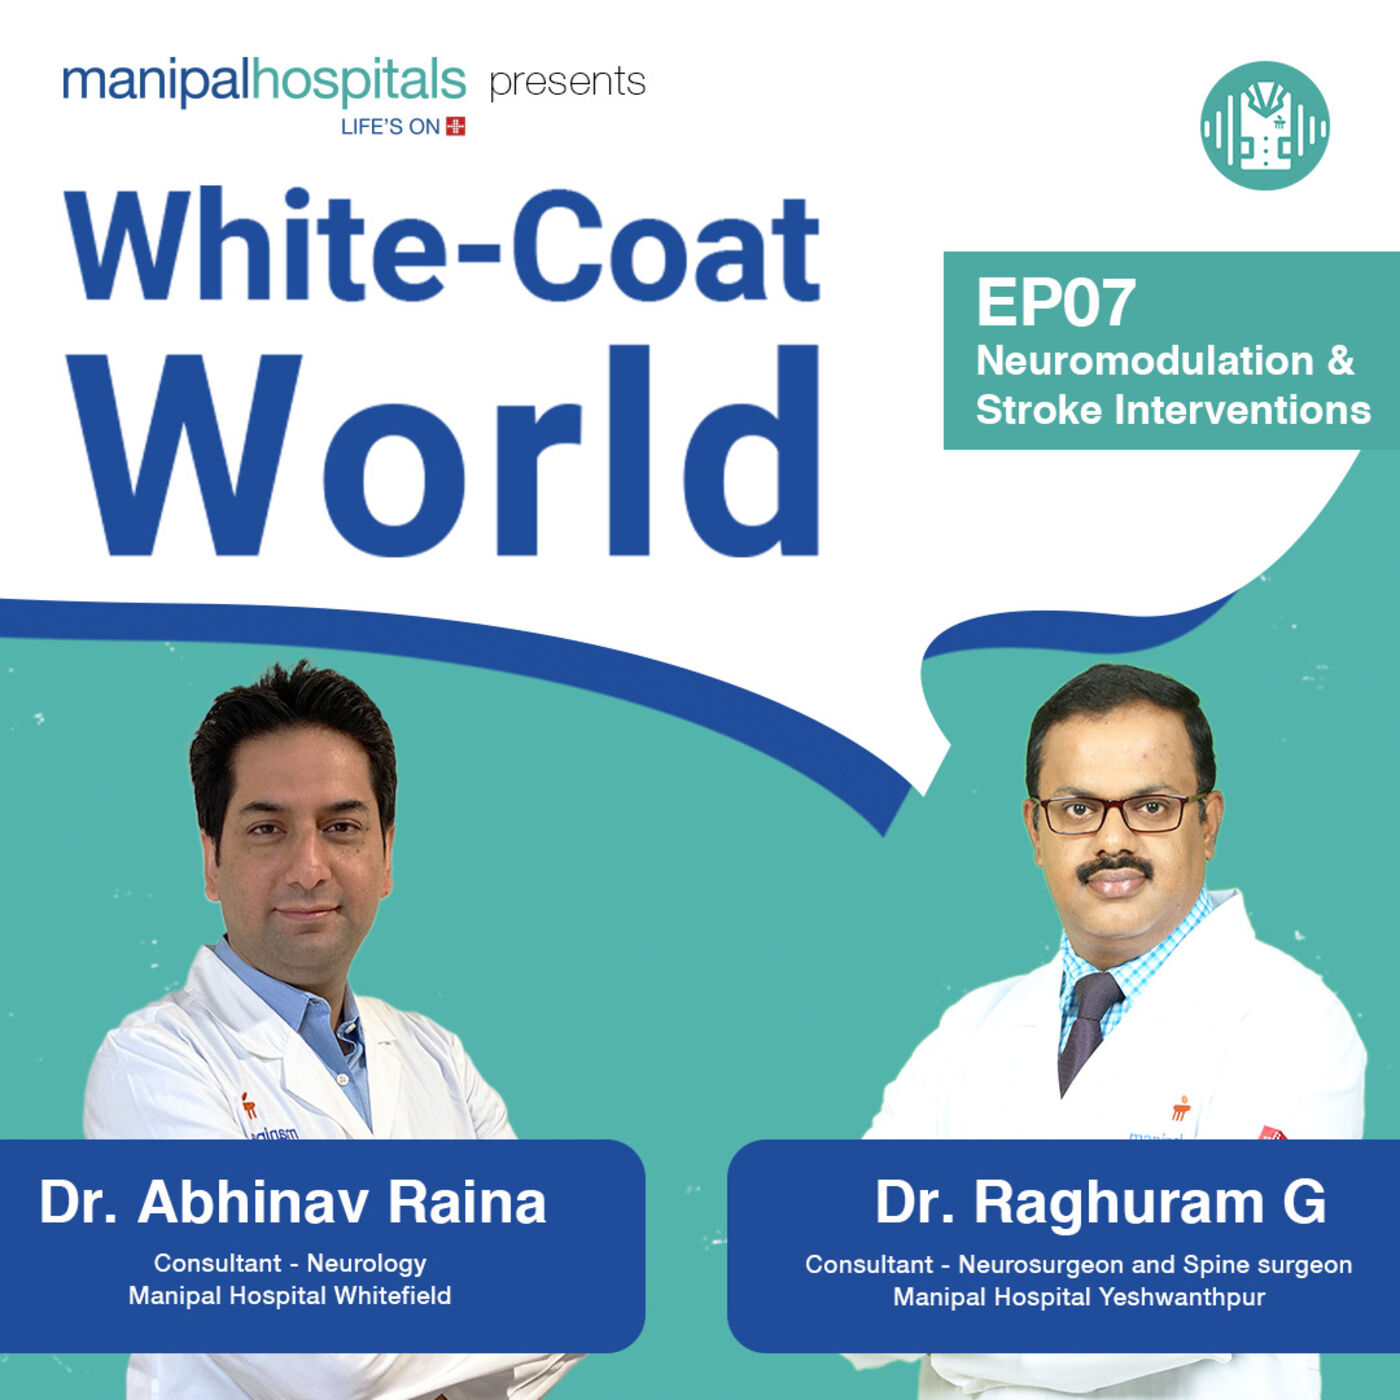 Neuromodulation and Stroke Interventions - Dr Raghuram G Manipal Hospitals